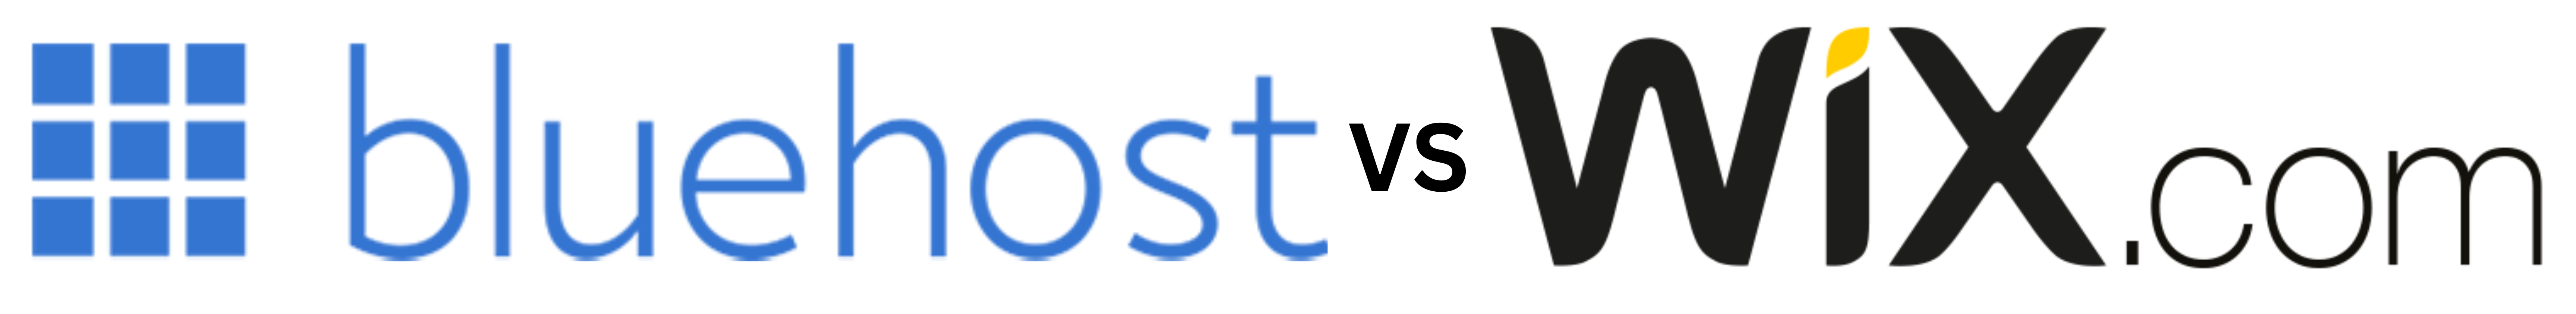 Bluehost vs. Wix